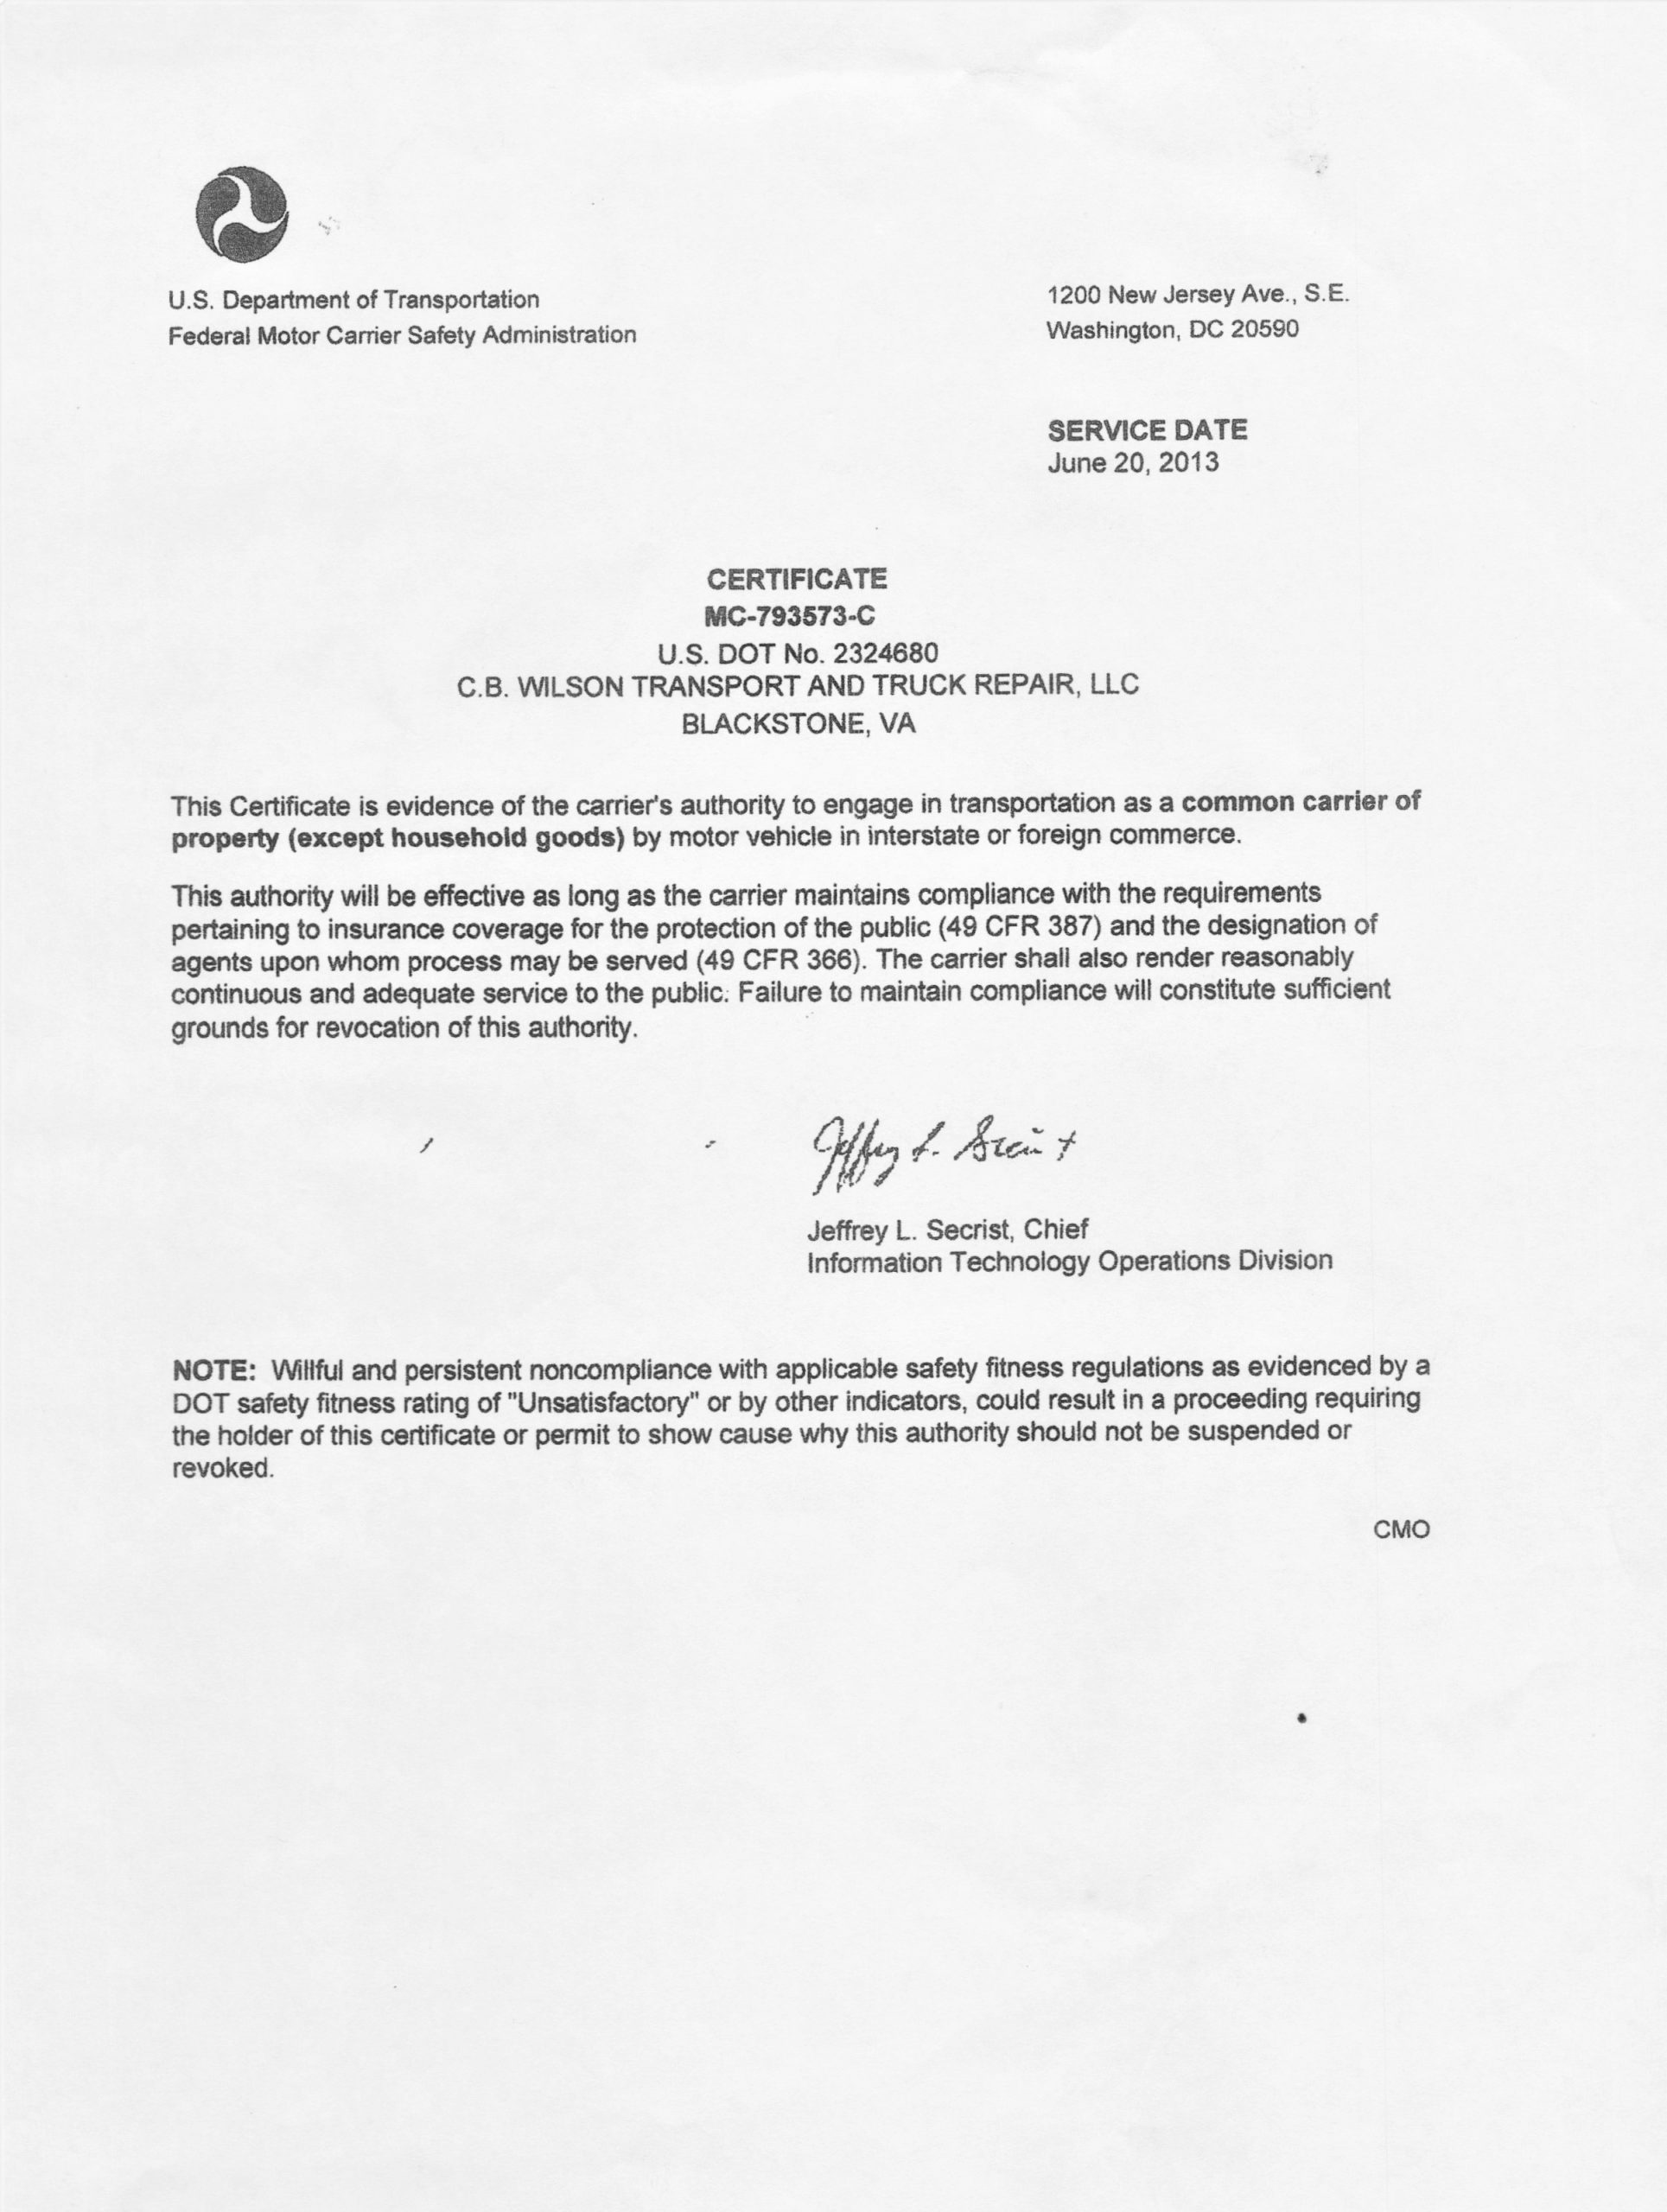 CB Wilson Transport U.S. DOT Certificate